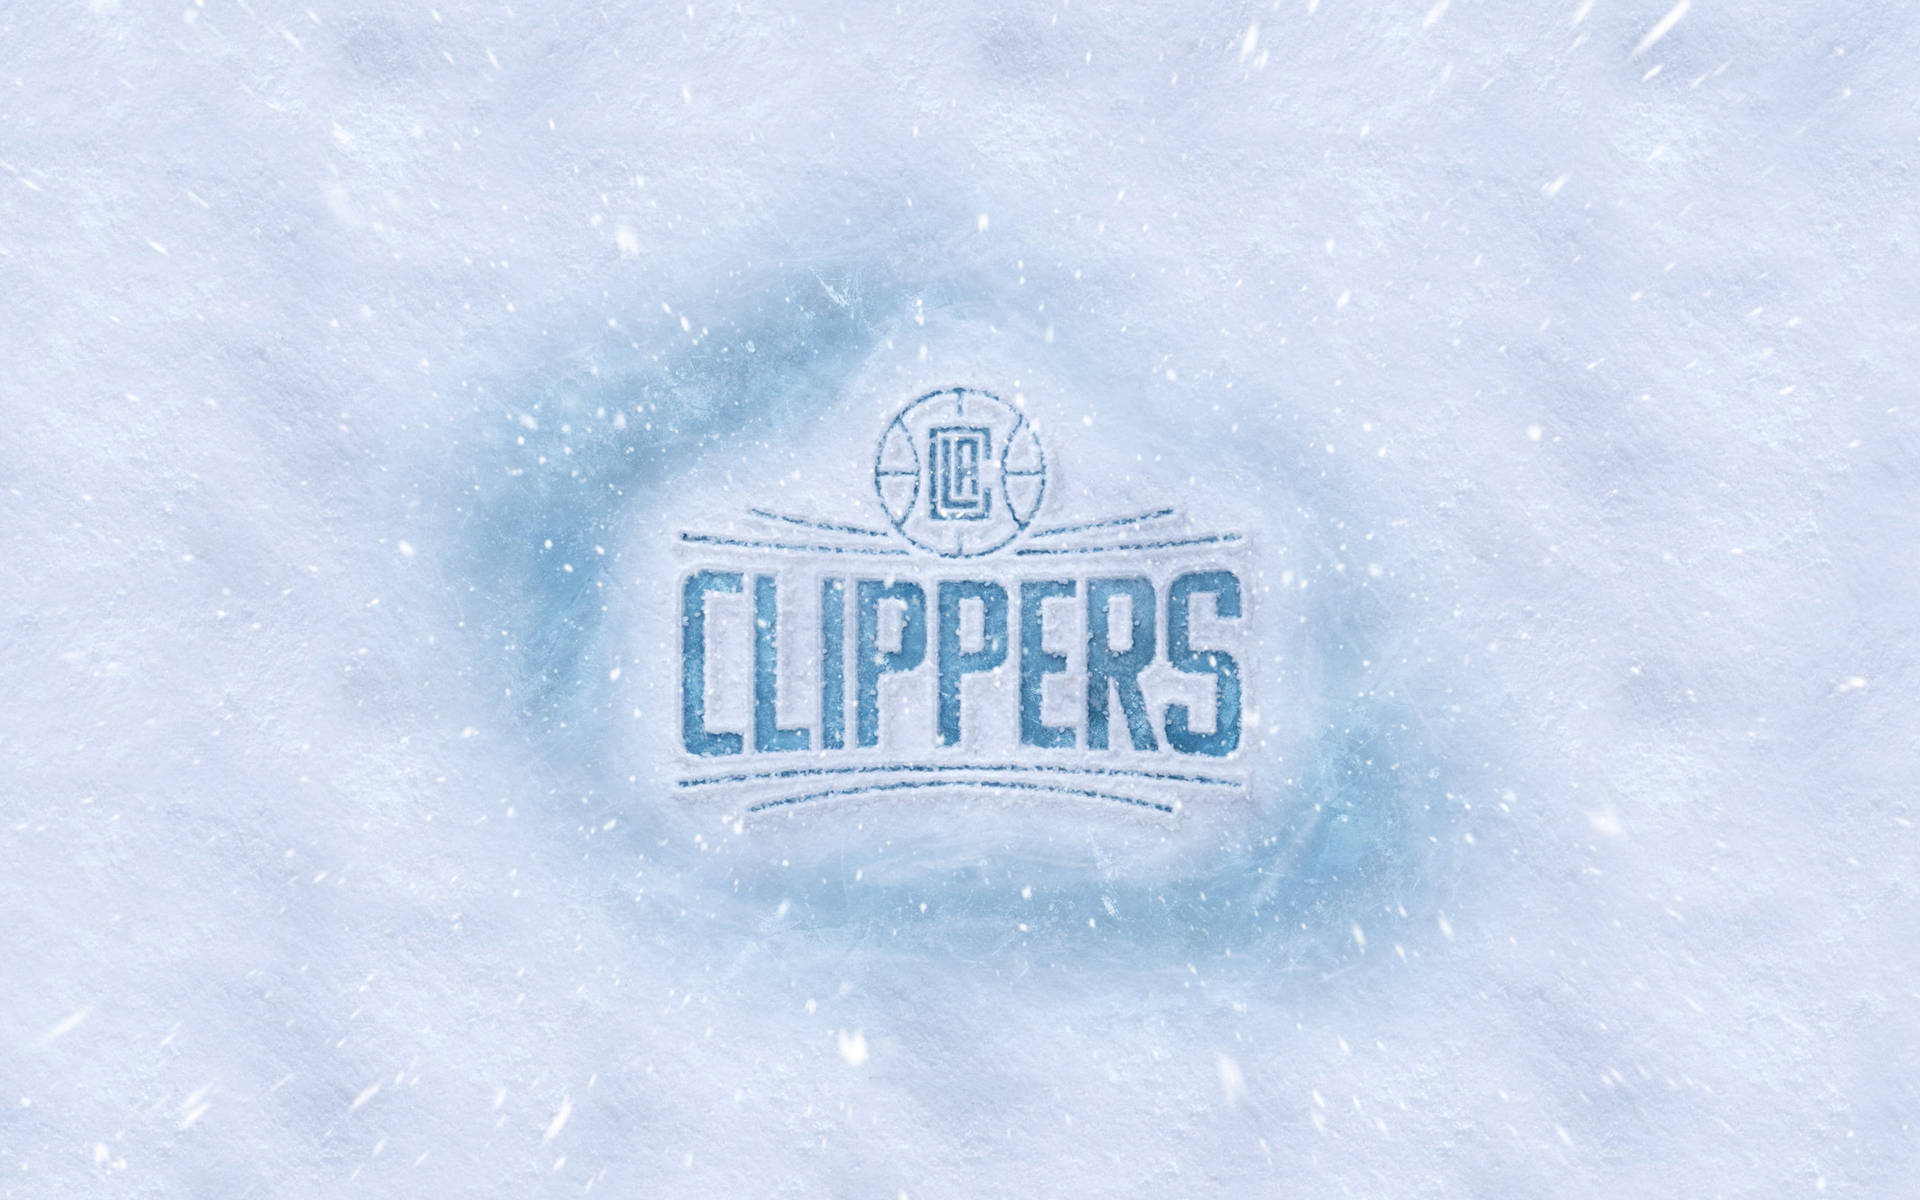 Los Angeles Clippers Winter Logo Wallpaper